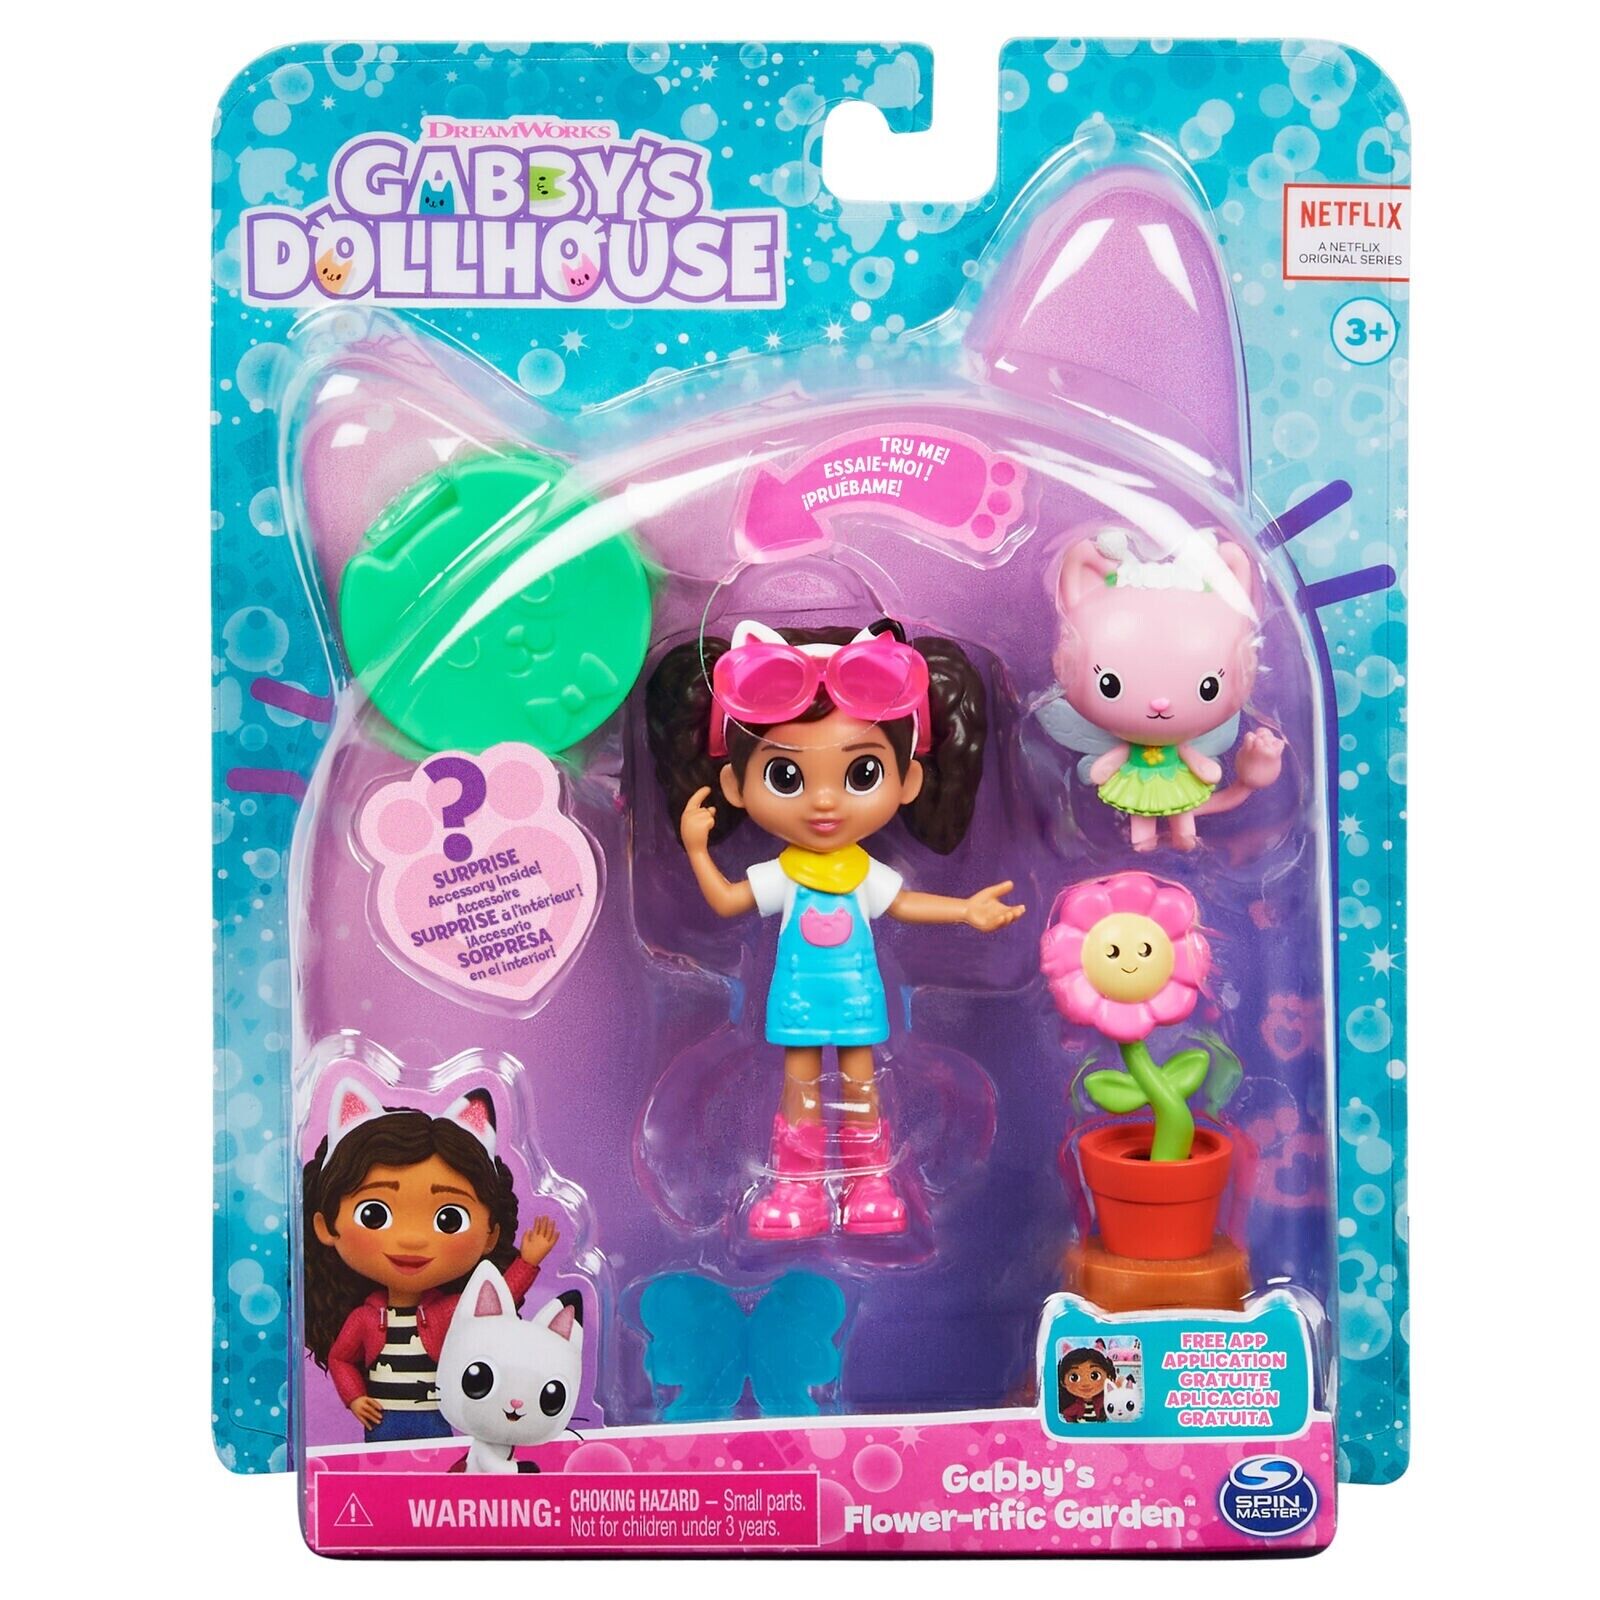 New Gabby's Dollhouse Flower-rific Garden Set - Perfect for Playtime!